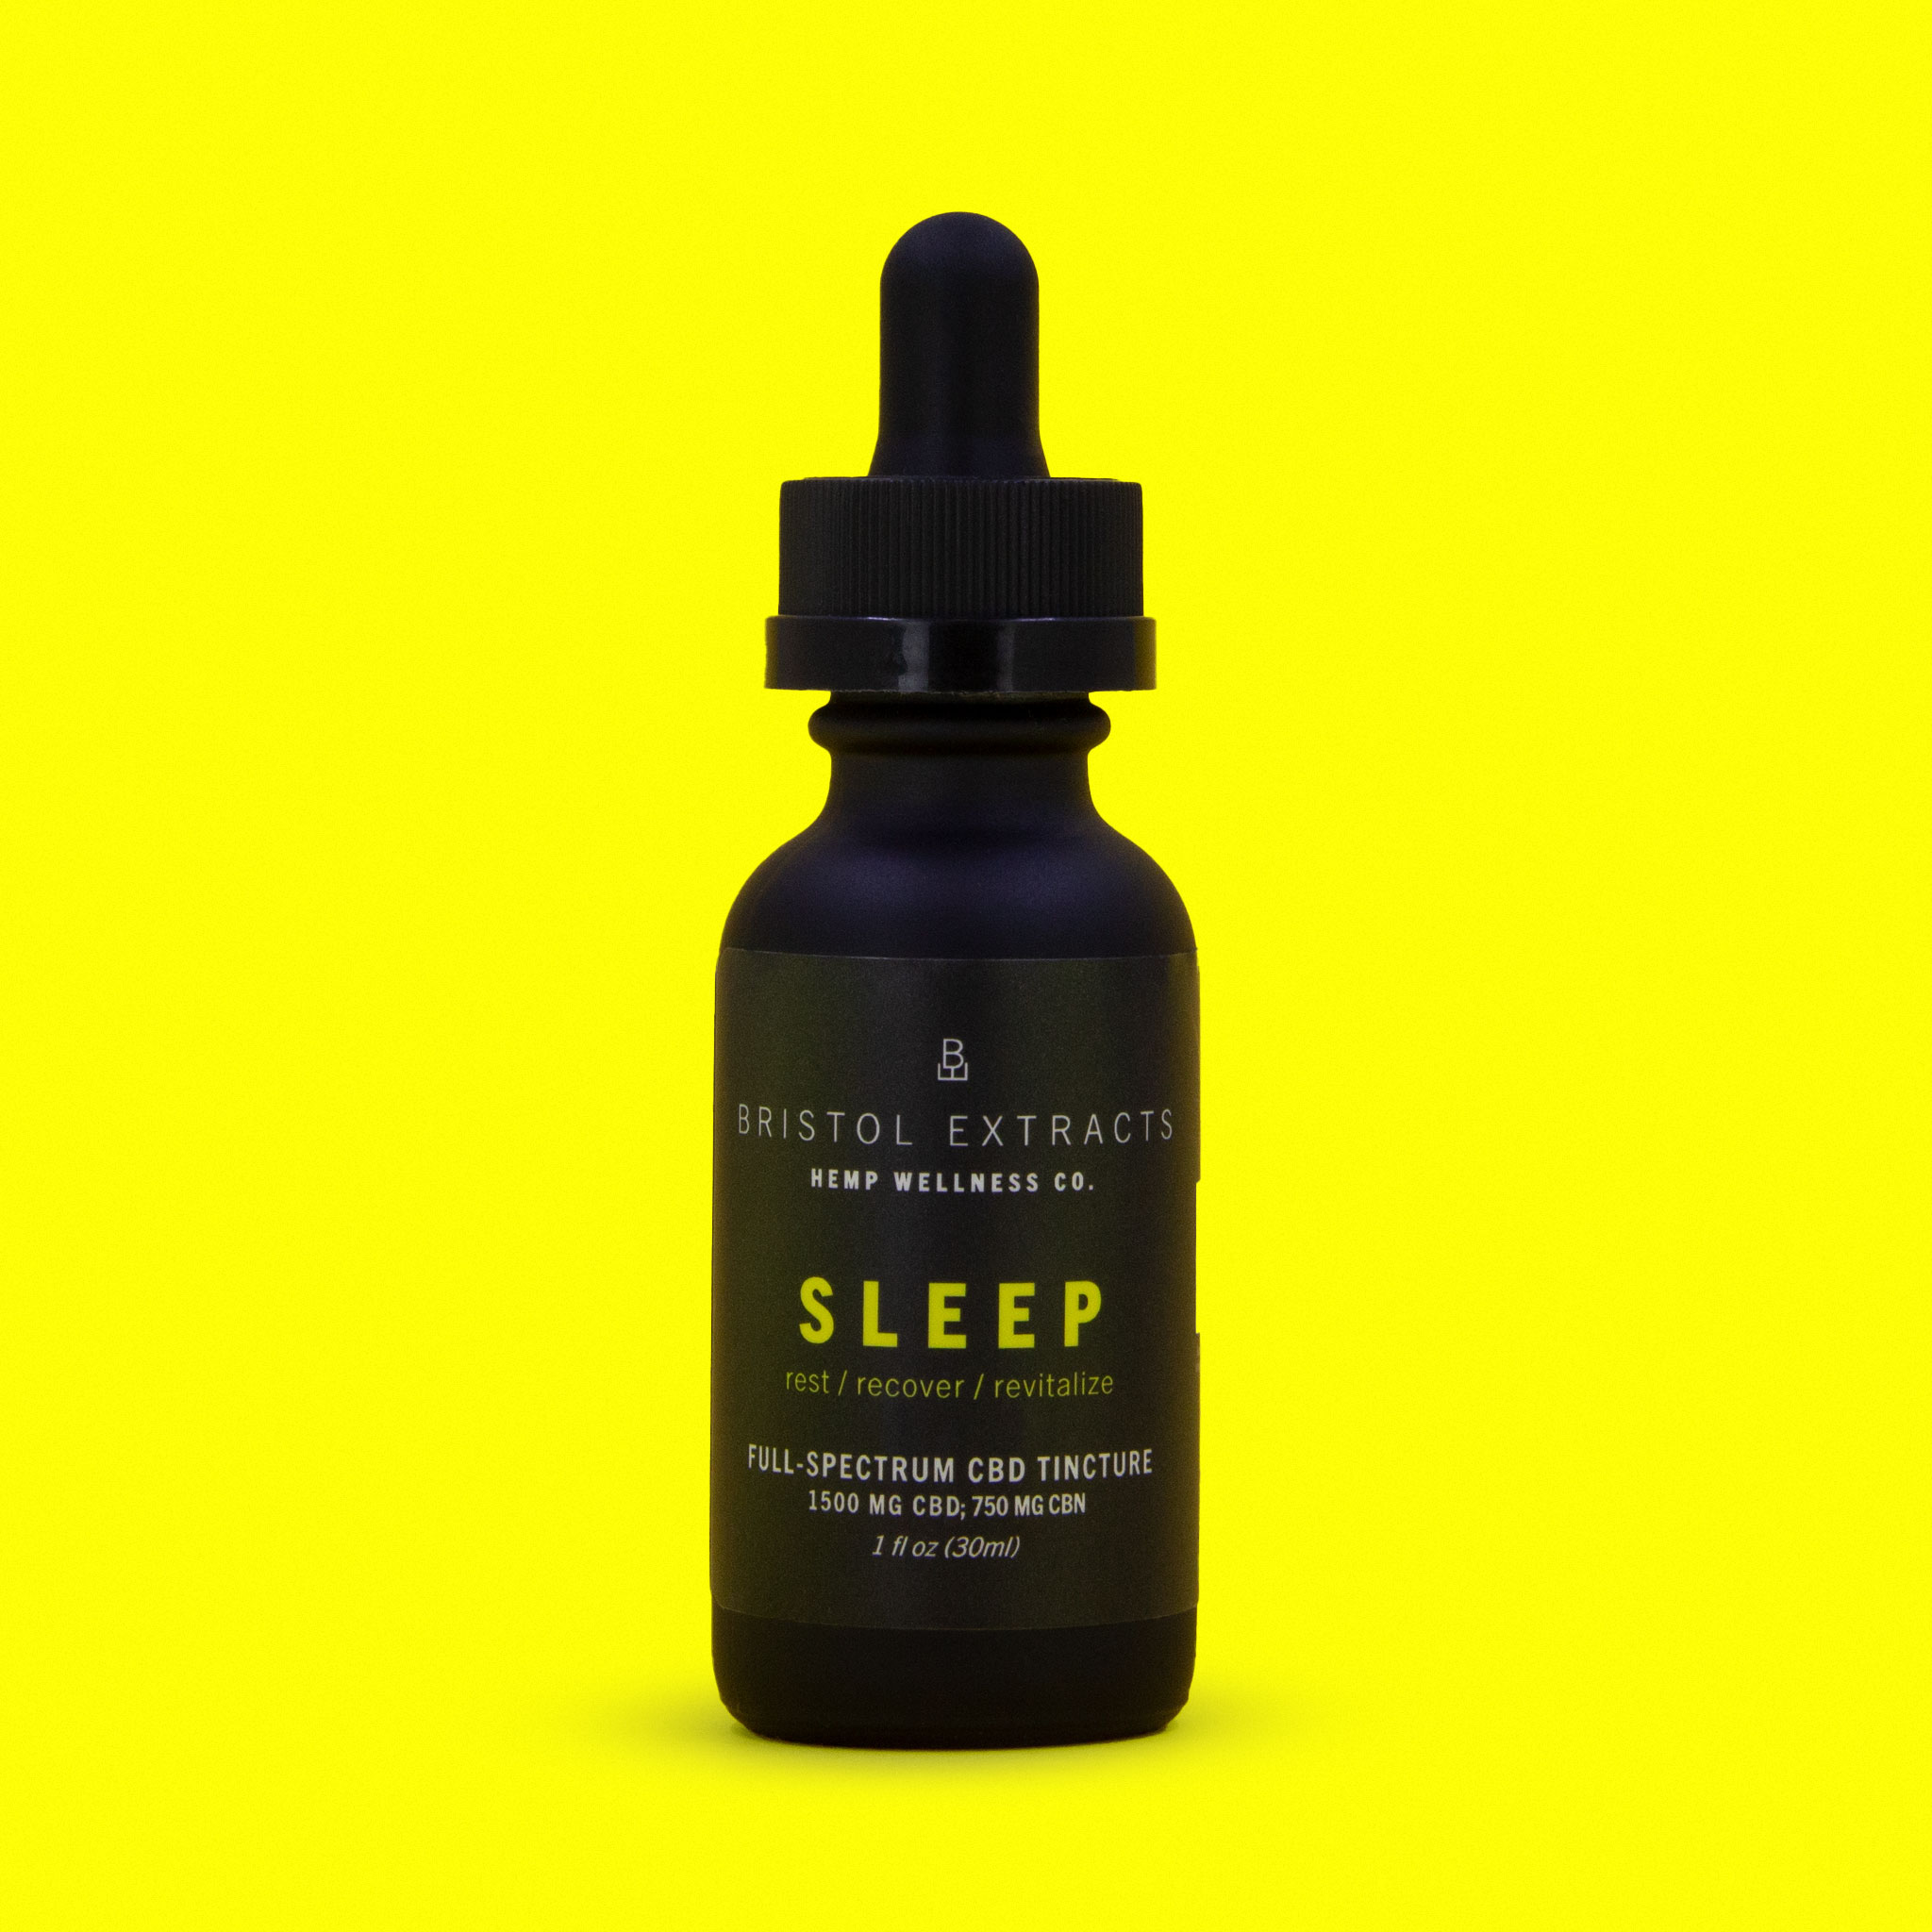 sleep tincture bottle on yellow background